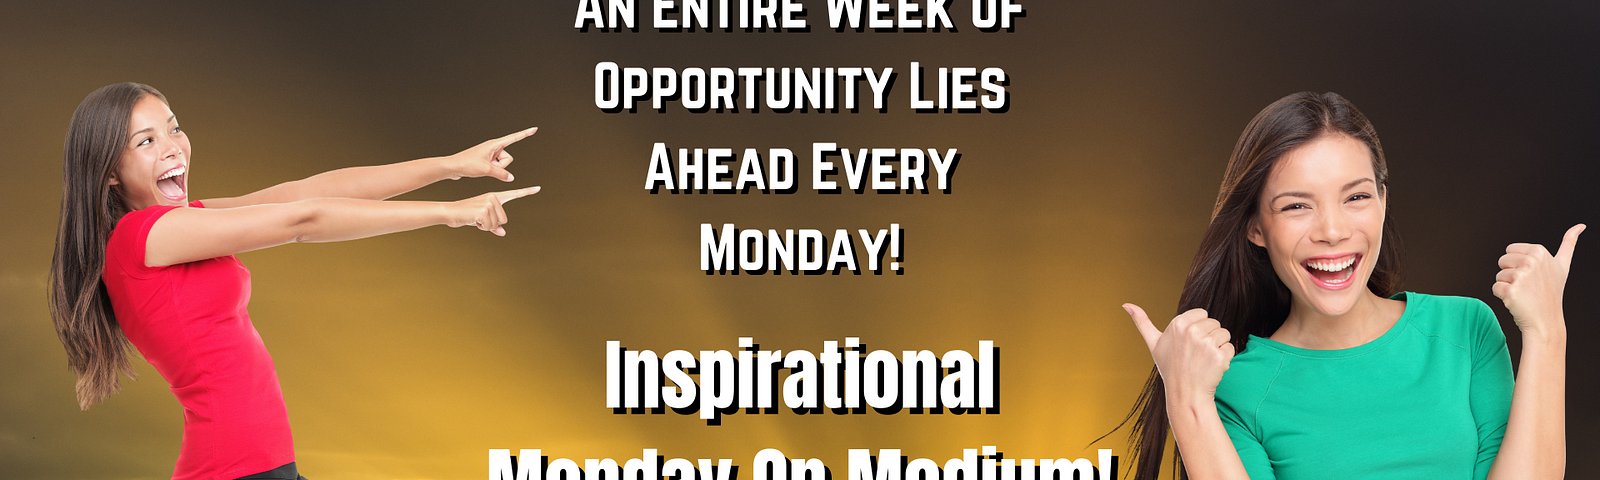 monday motivation and inspiration with videos on medium